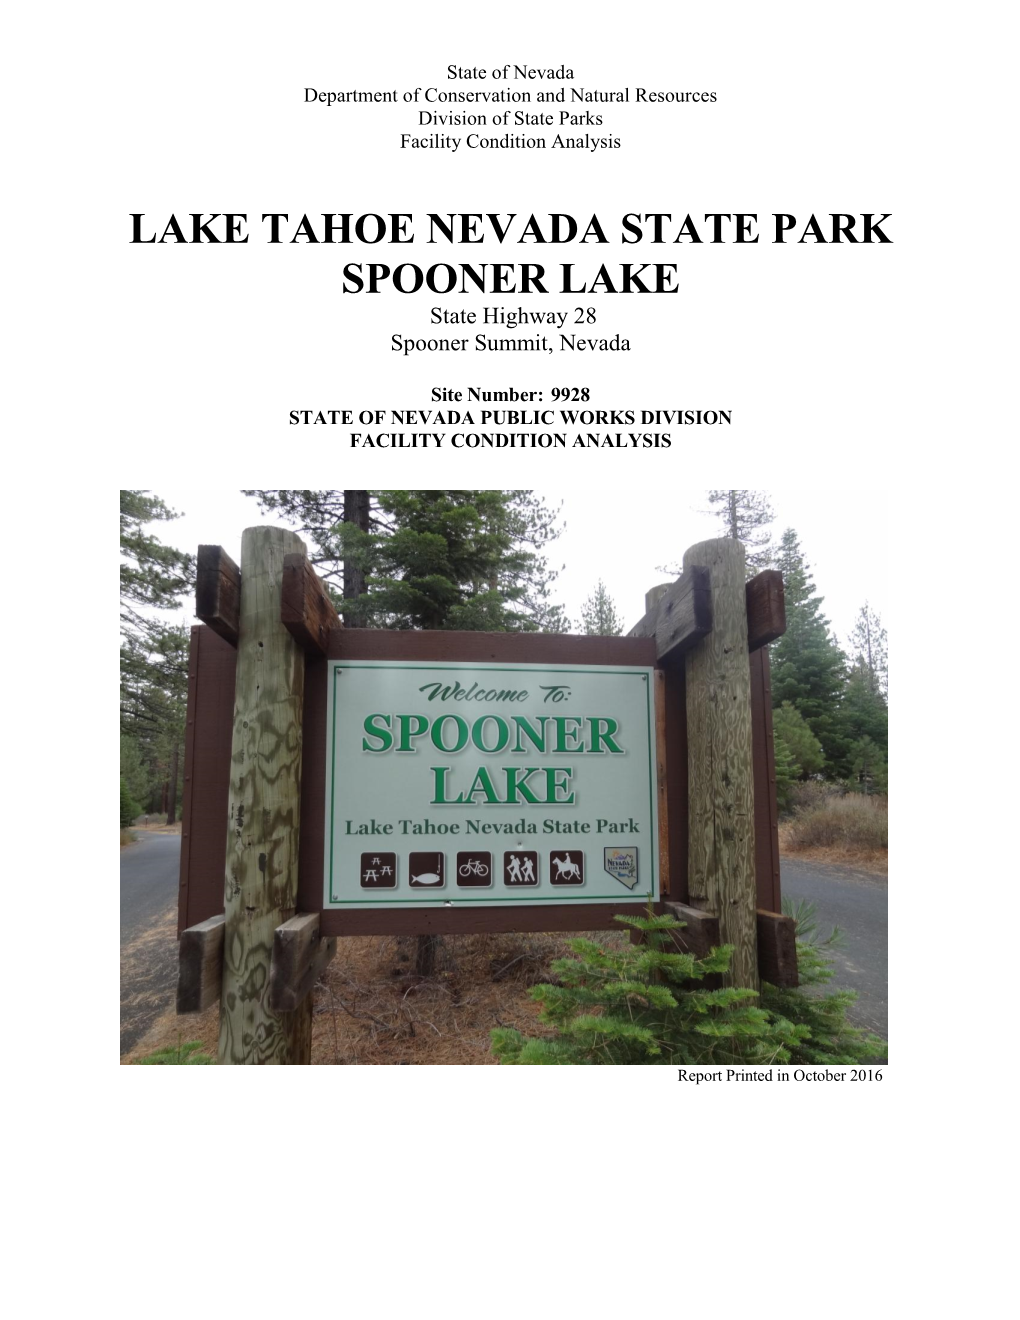 LAKE TAHOE NEVADA STATE PARK SPOONER LAKE State Highway 28 Spooner Summit, Nevada